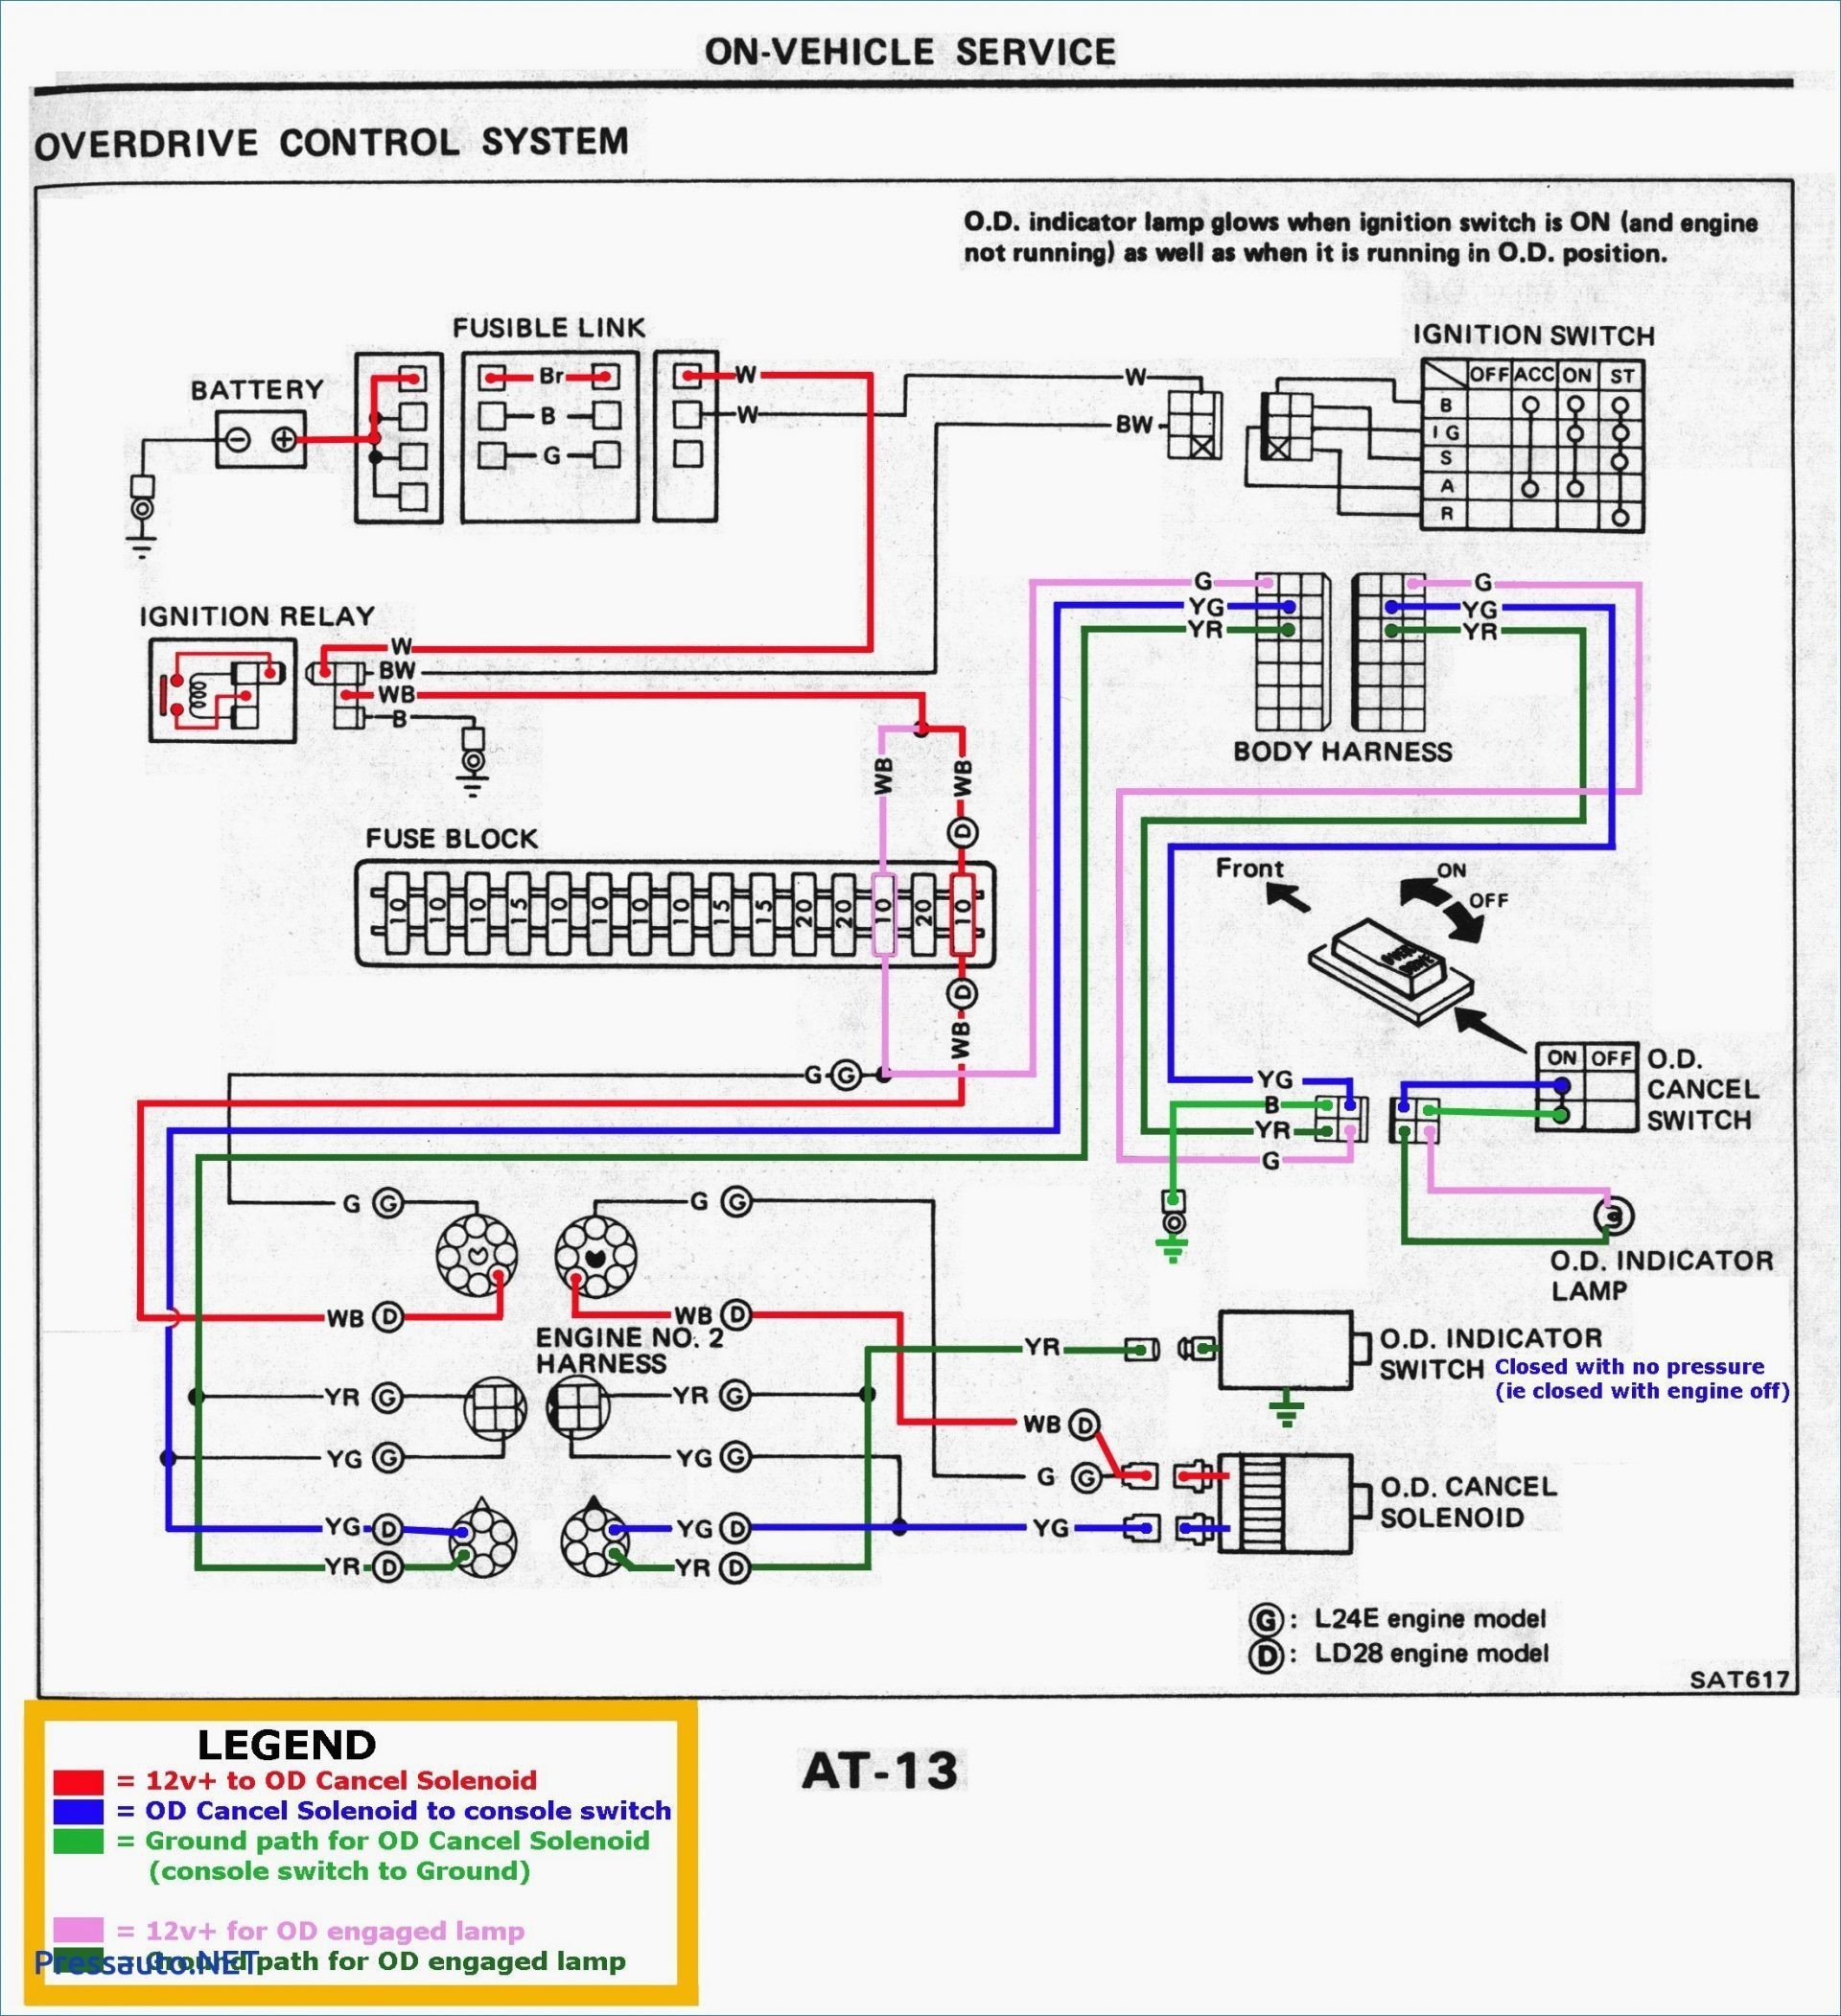 Marine Dual Battery Wiring Diagram Wiring Diagram for Marine Inverter New Marine Battery Wiring Diagram Of Marine Dual Battery Wiring Diagram